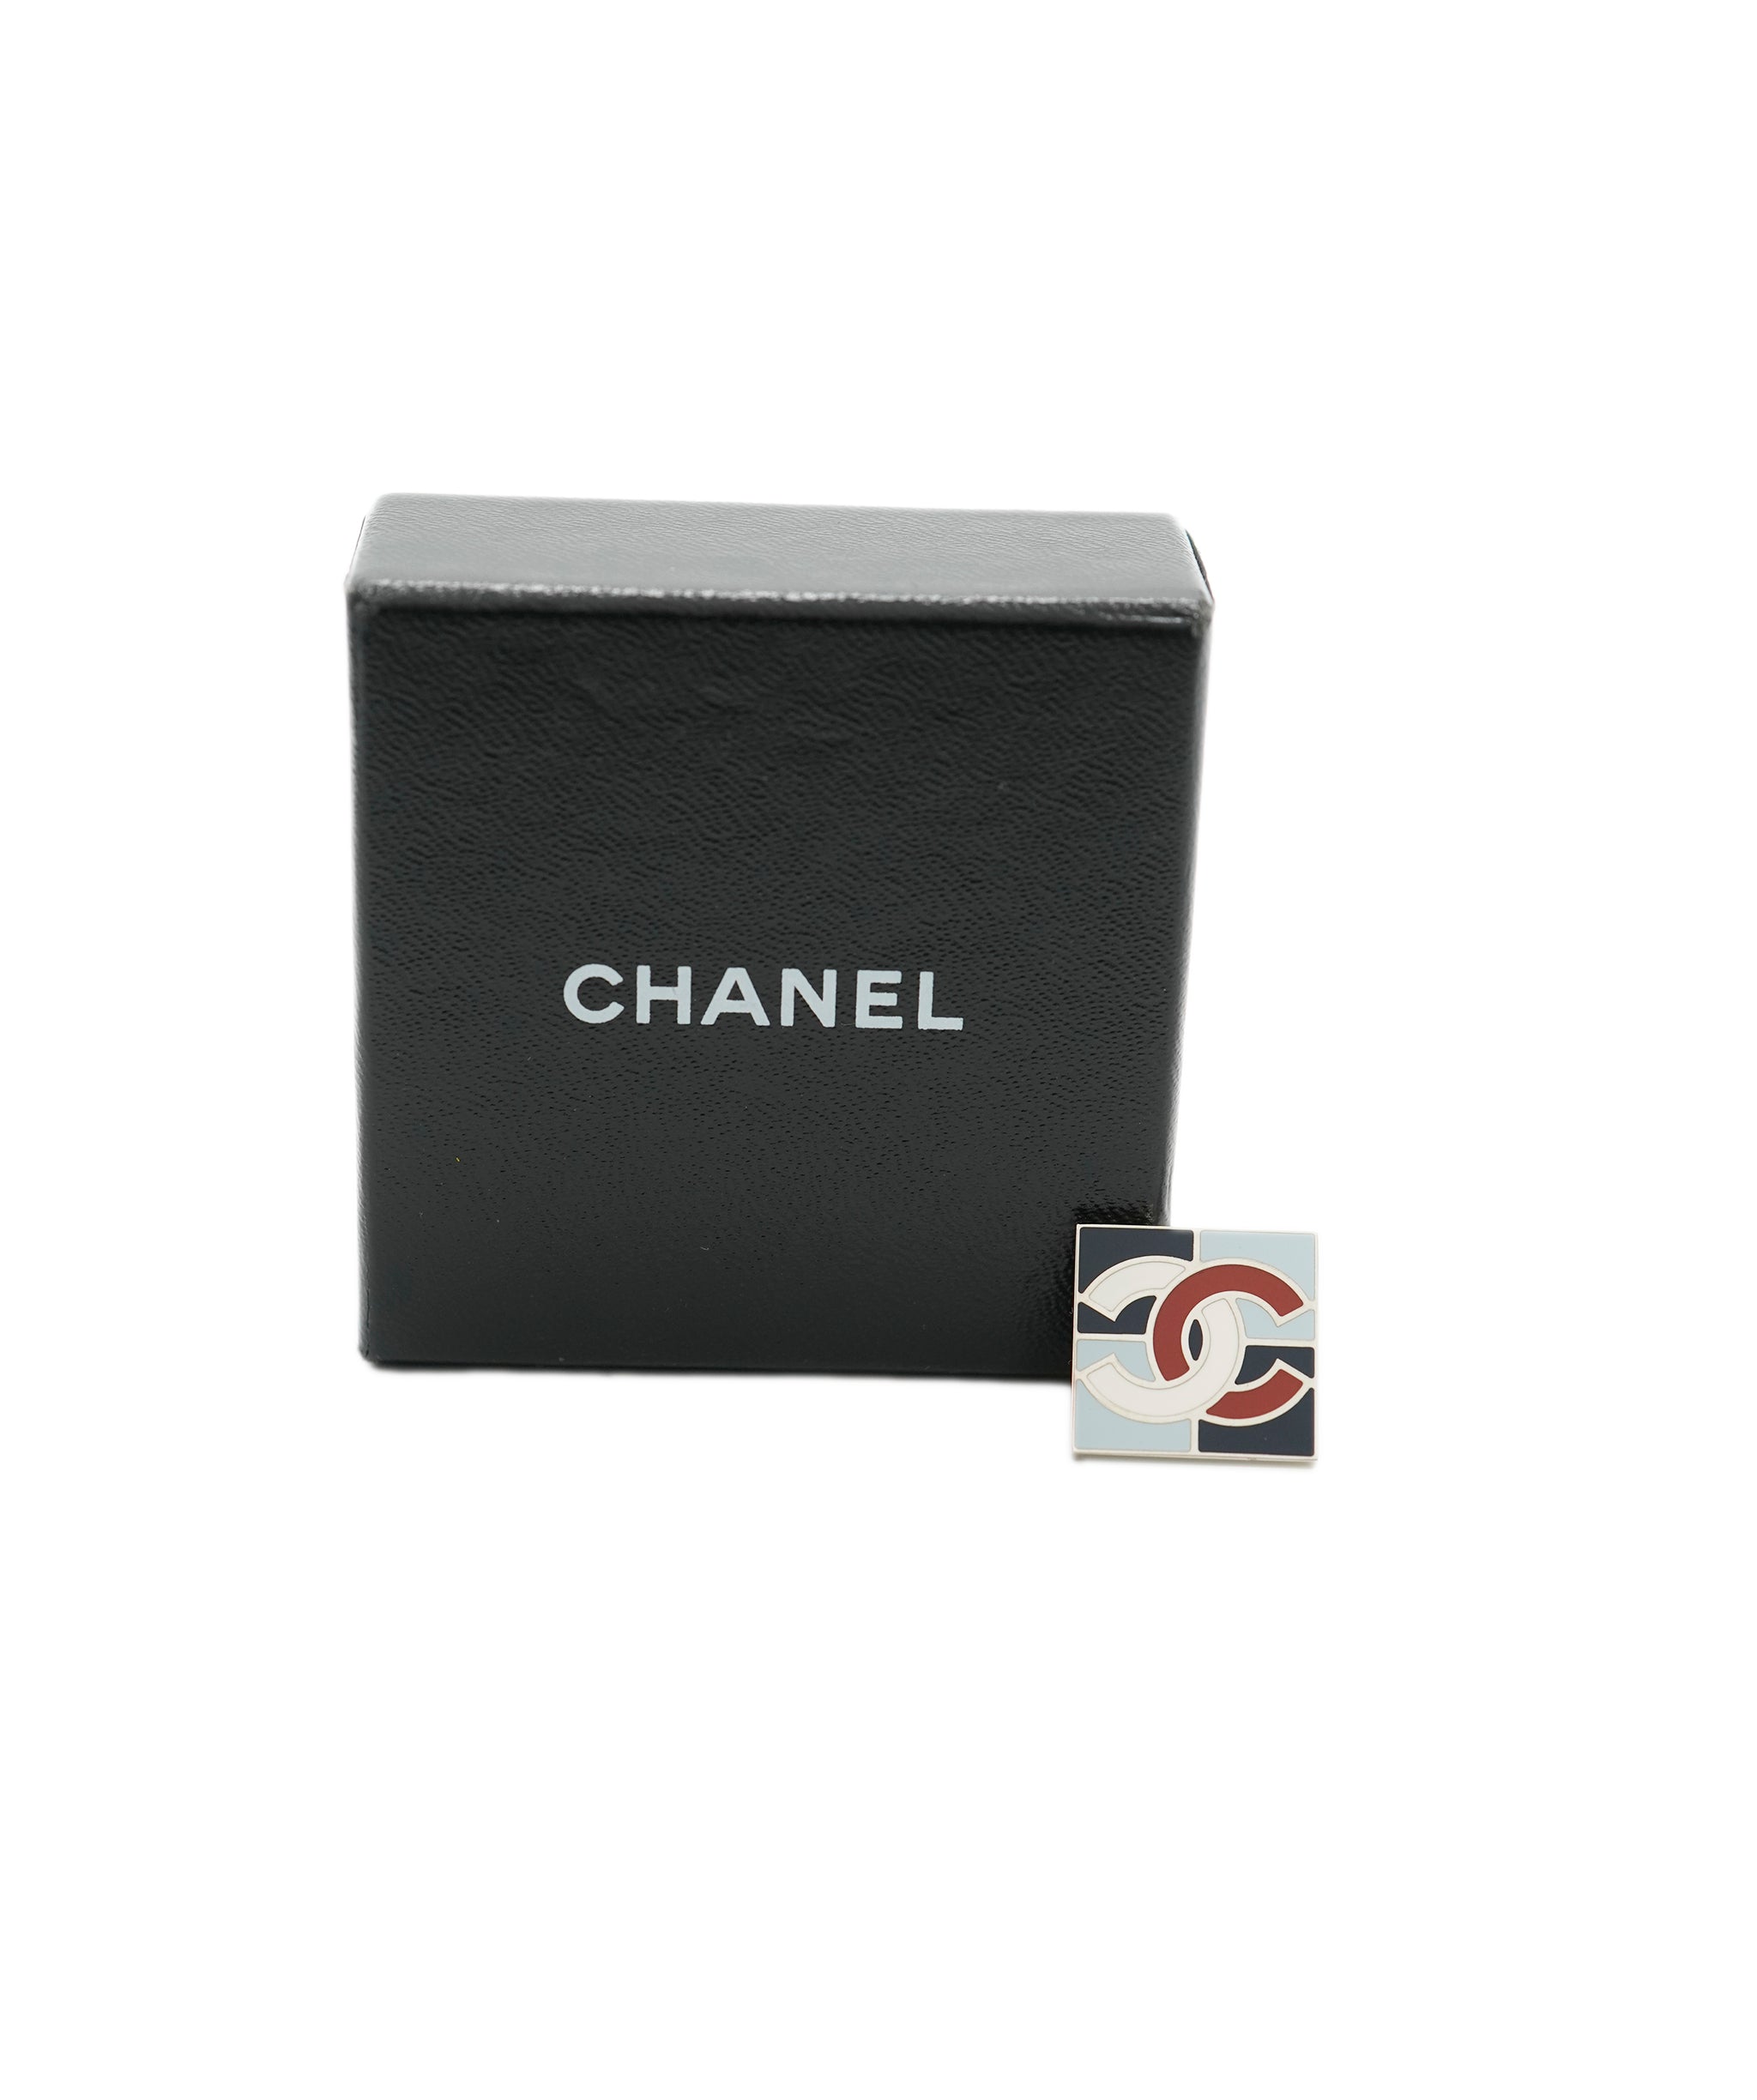 Chanel Chanel Pin Brooch White PXL2434